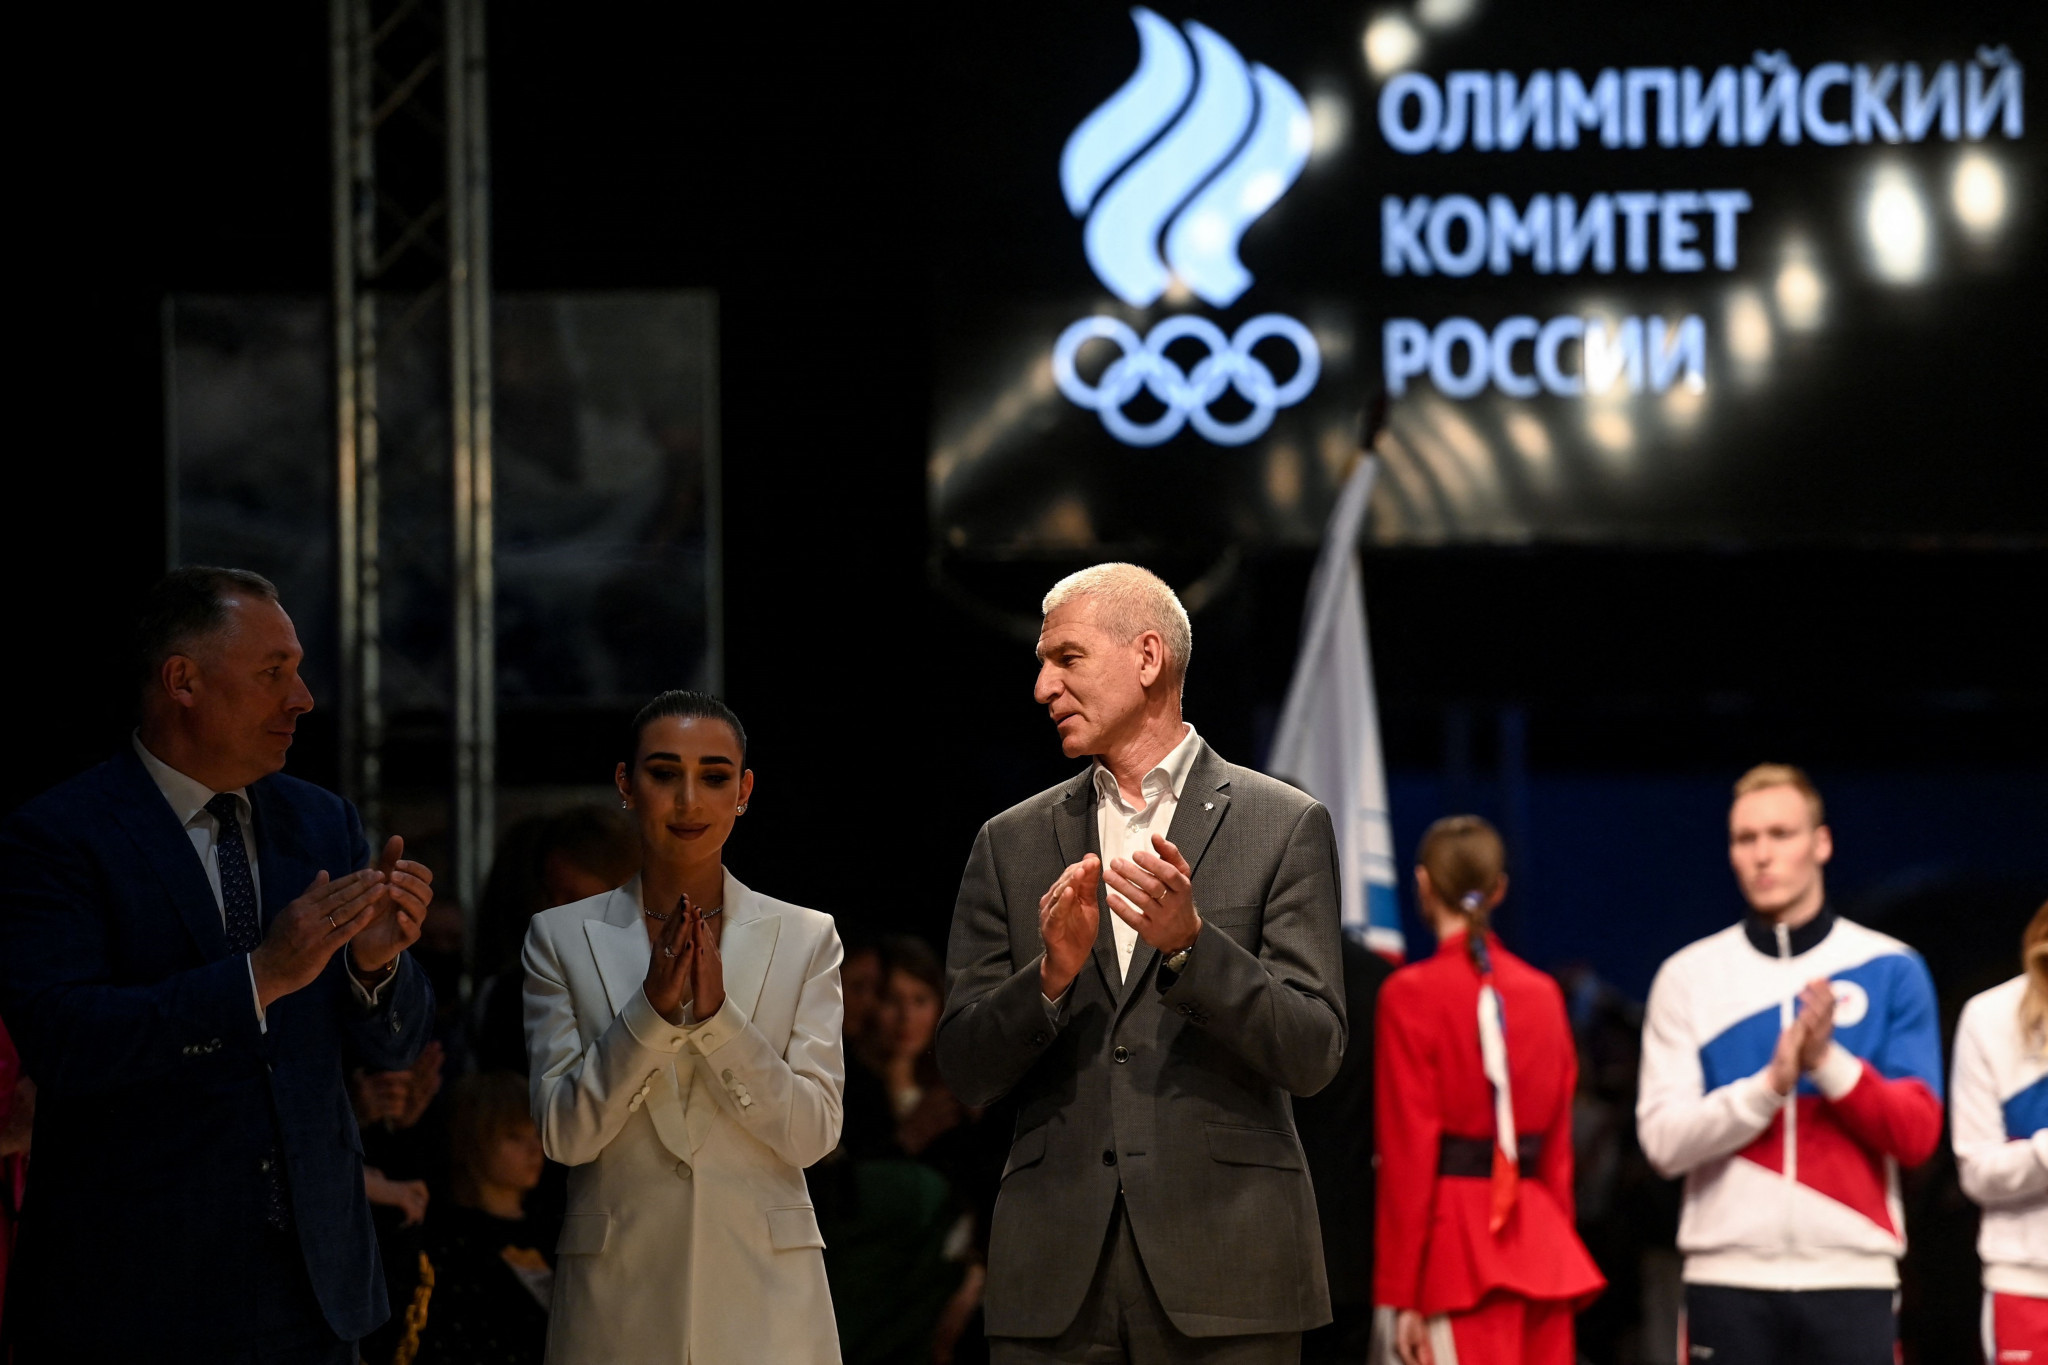 Russian Sports Minister Oleg Matytsin believes any boycott is a 